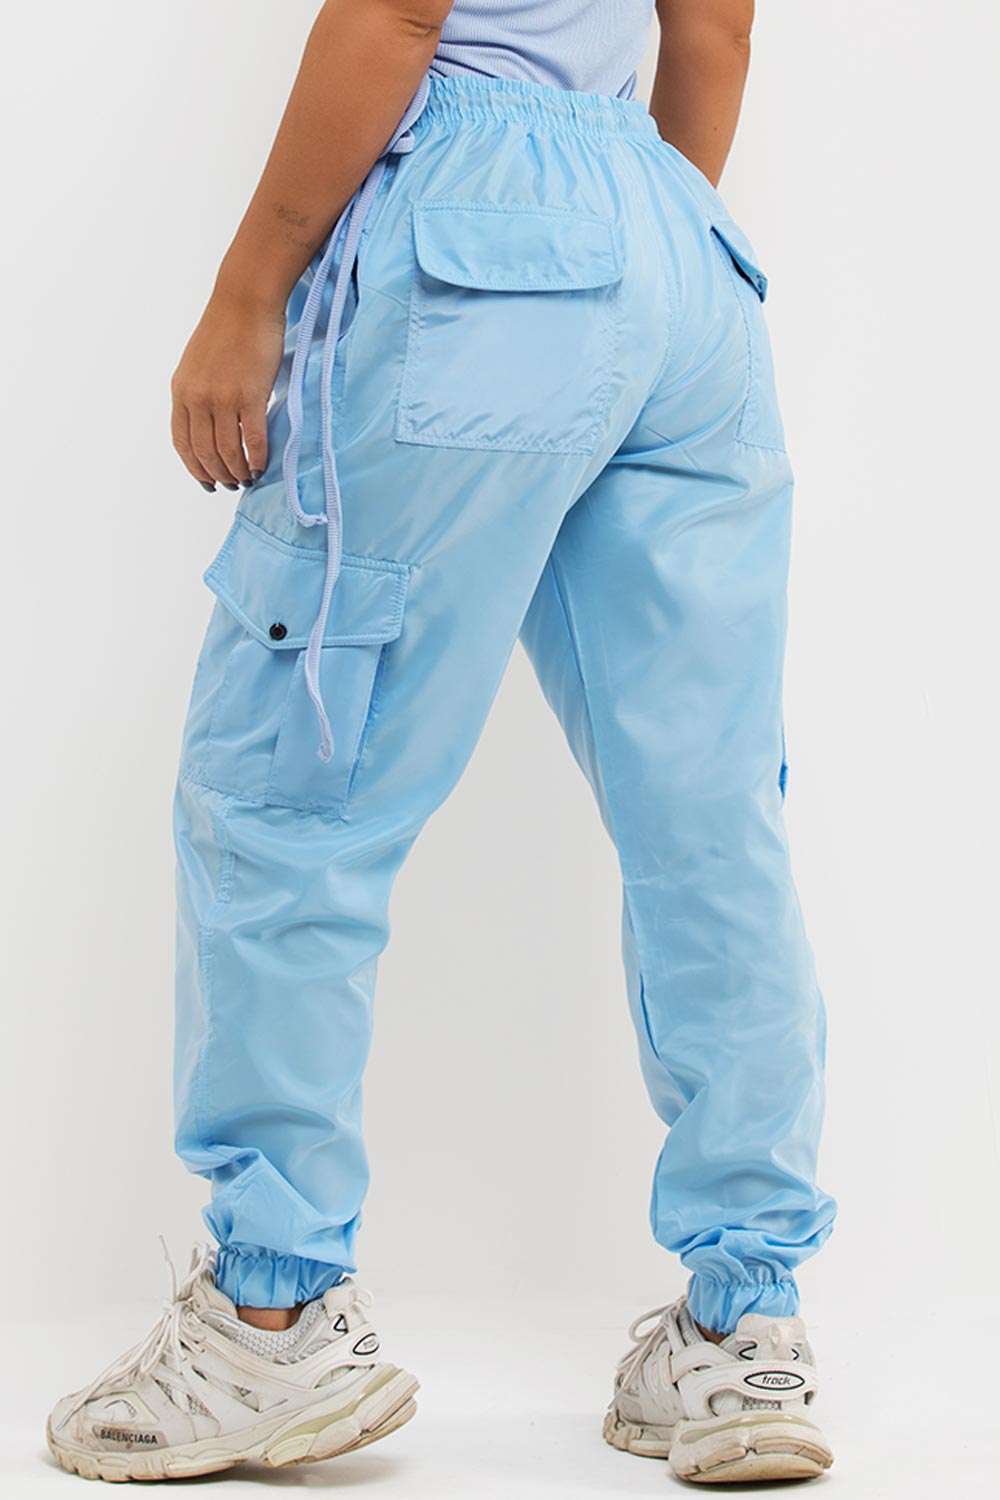 Wrangler Workwear Mens Blue Cargo Pants 36x30 ***BRAND NEW W/ TAGS*** - Đức  An Phát